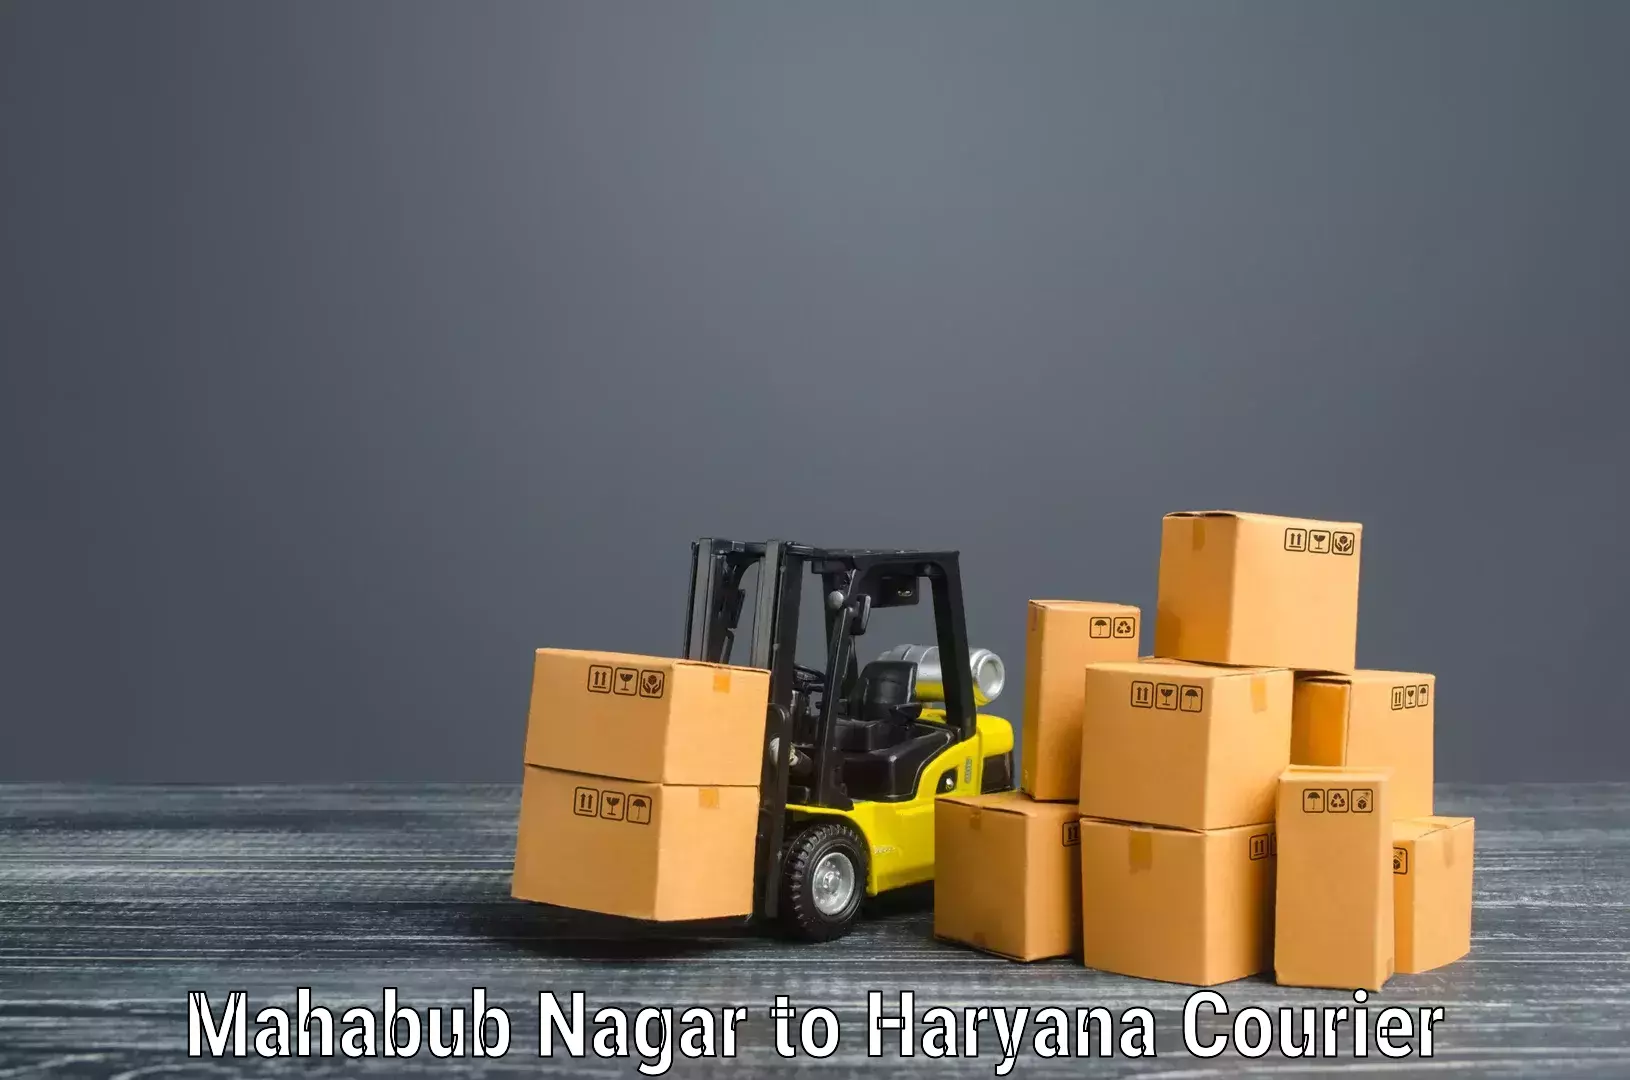 Furniture moving specialists Mahabub Nagar to Panchkula